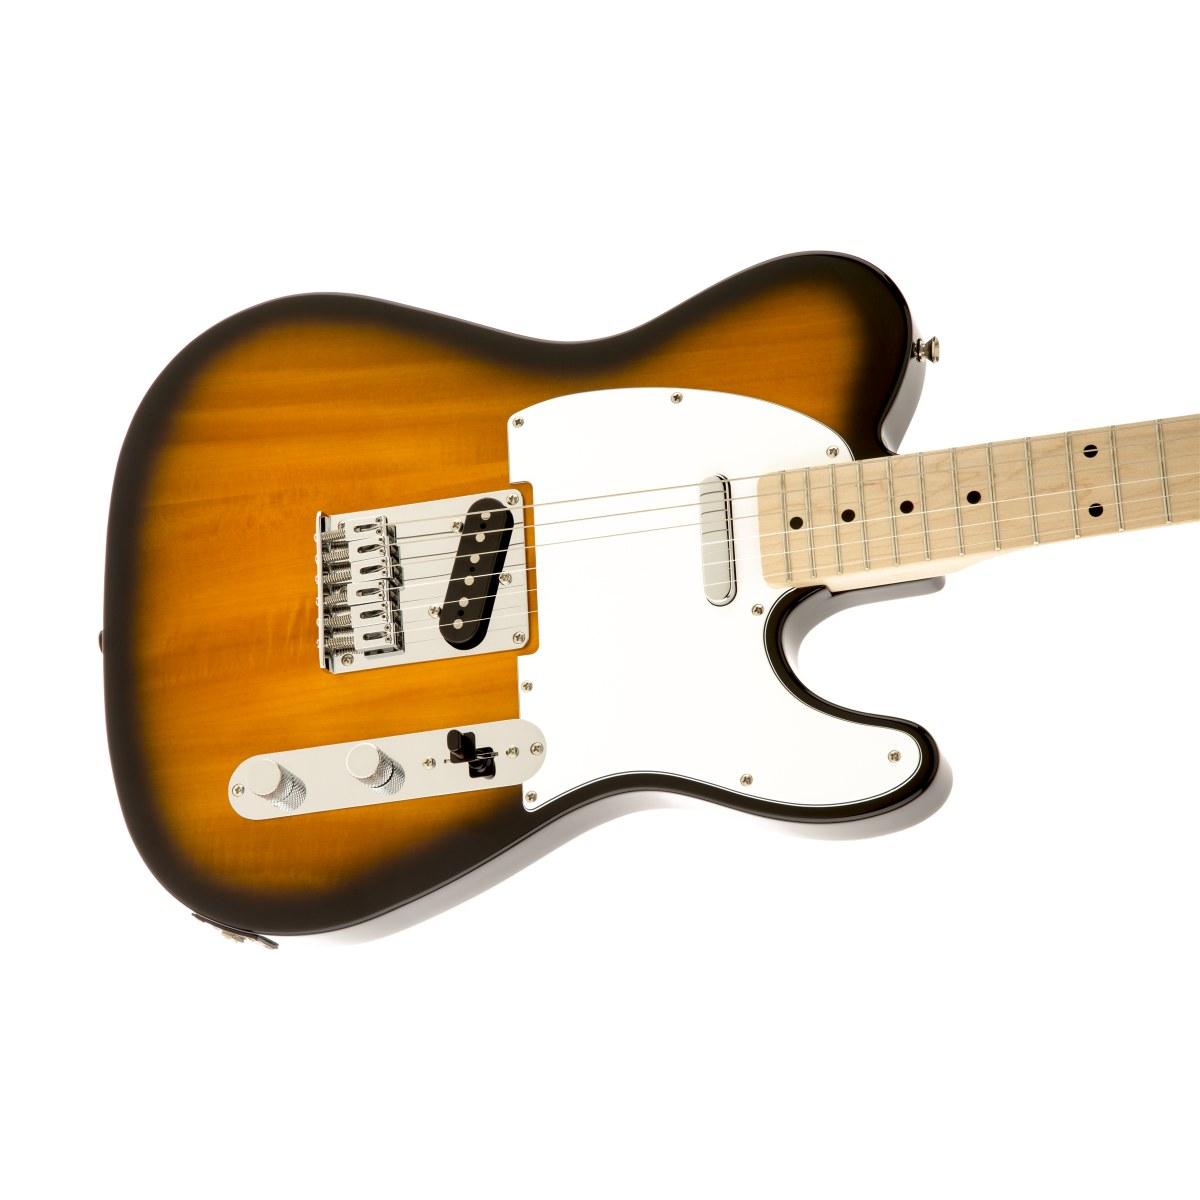 Fender affinity squier telecaster 2 tone sunburst chitarra elettrica